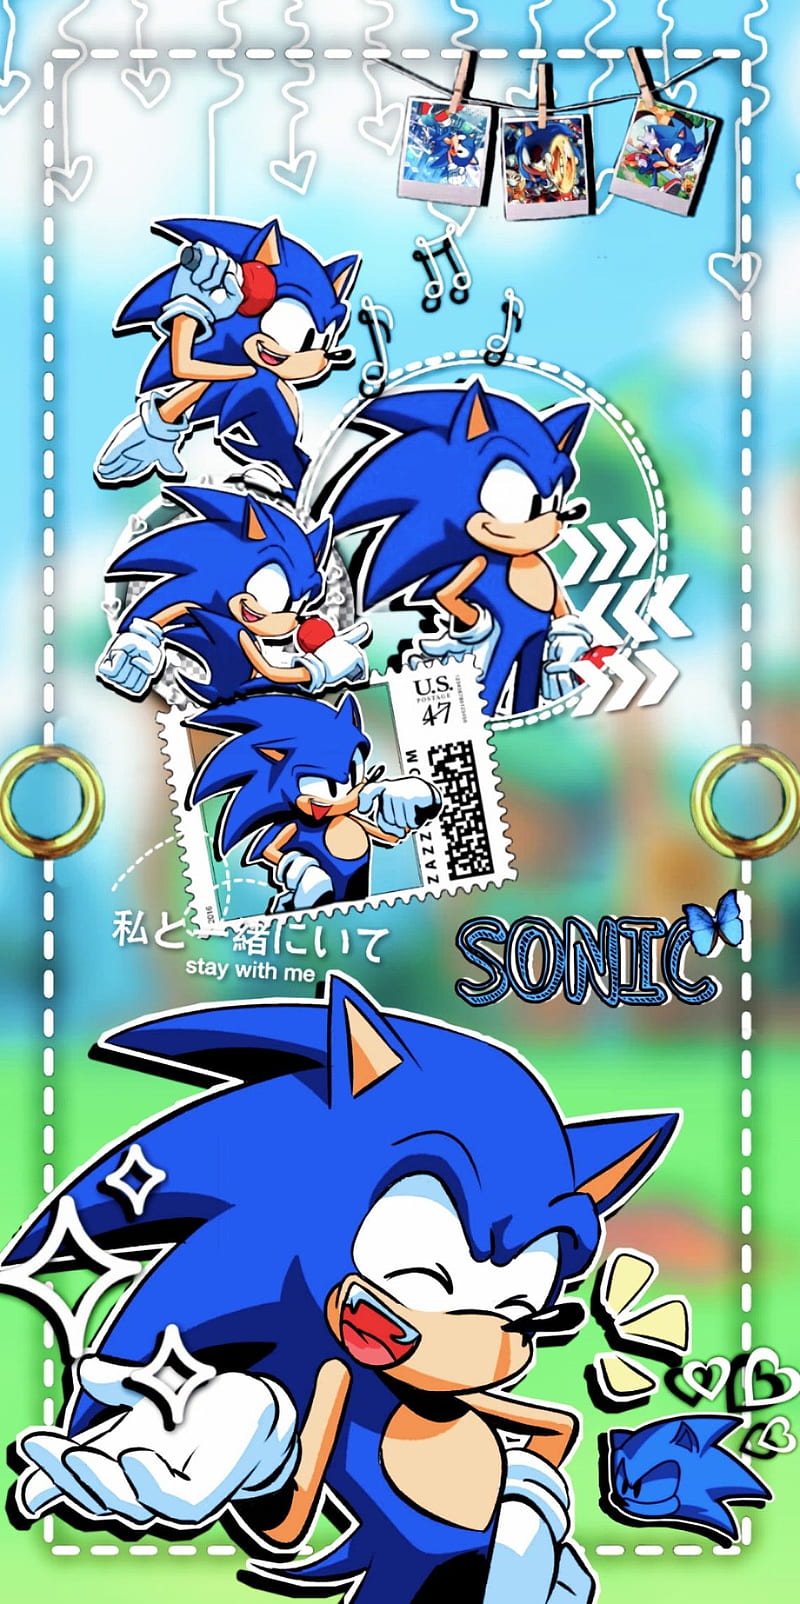 Classic Sonic art.